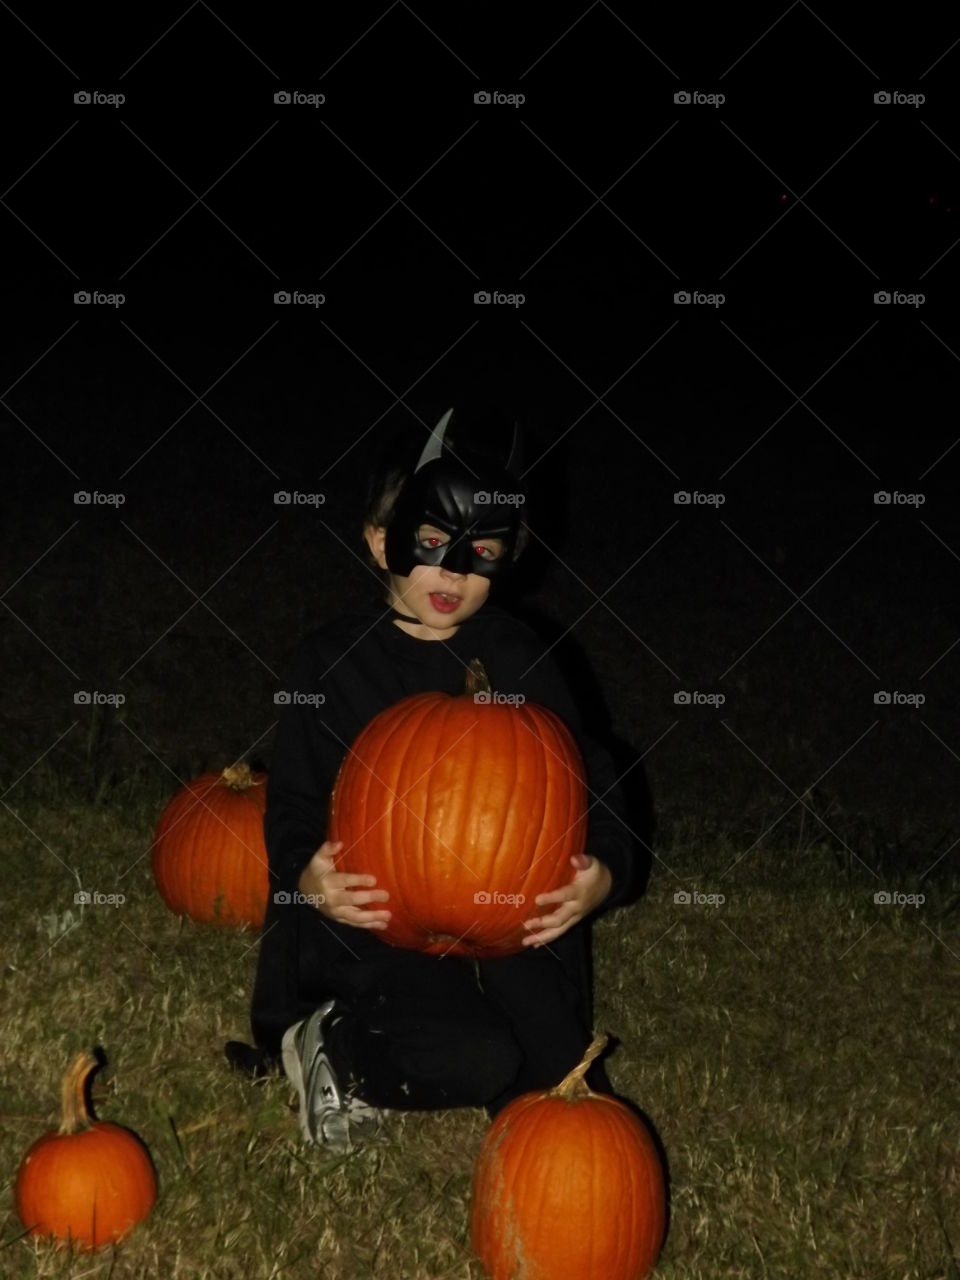 batman gets a pumpkin